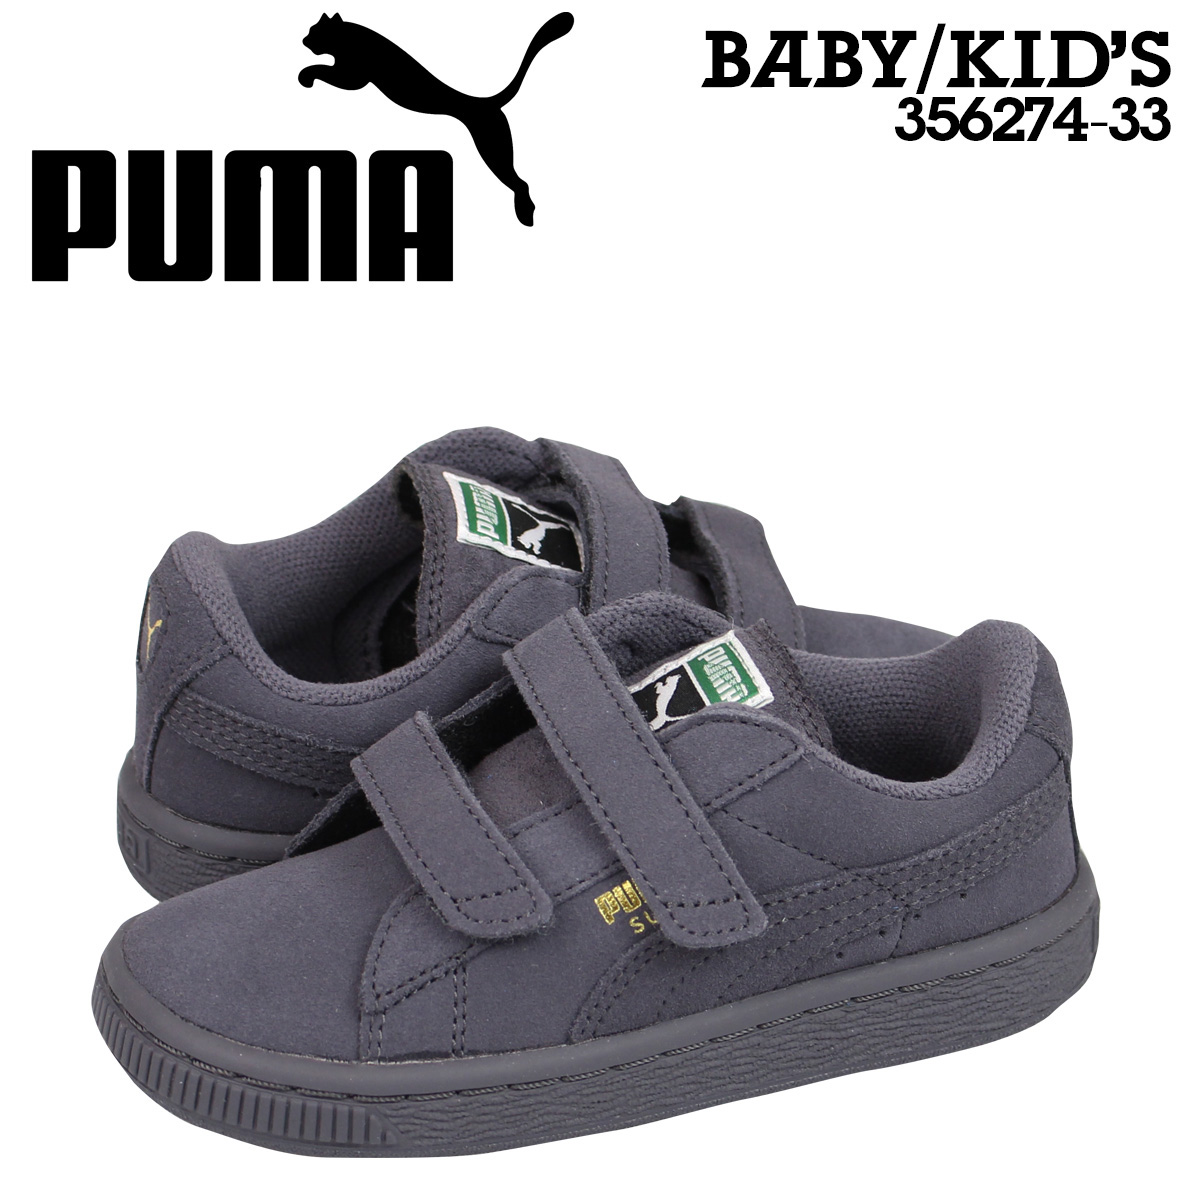 puma canvas shoes online shopping